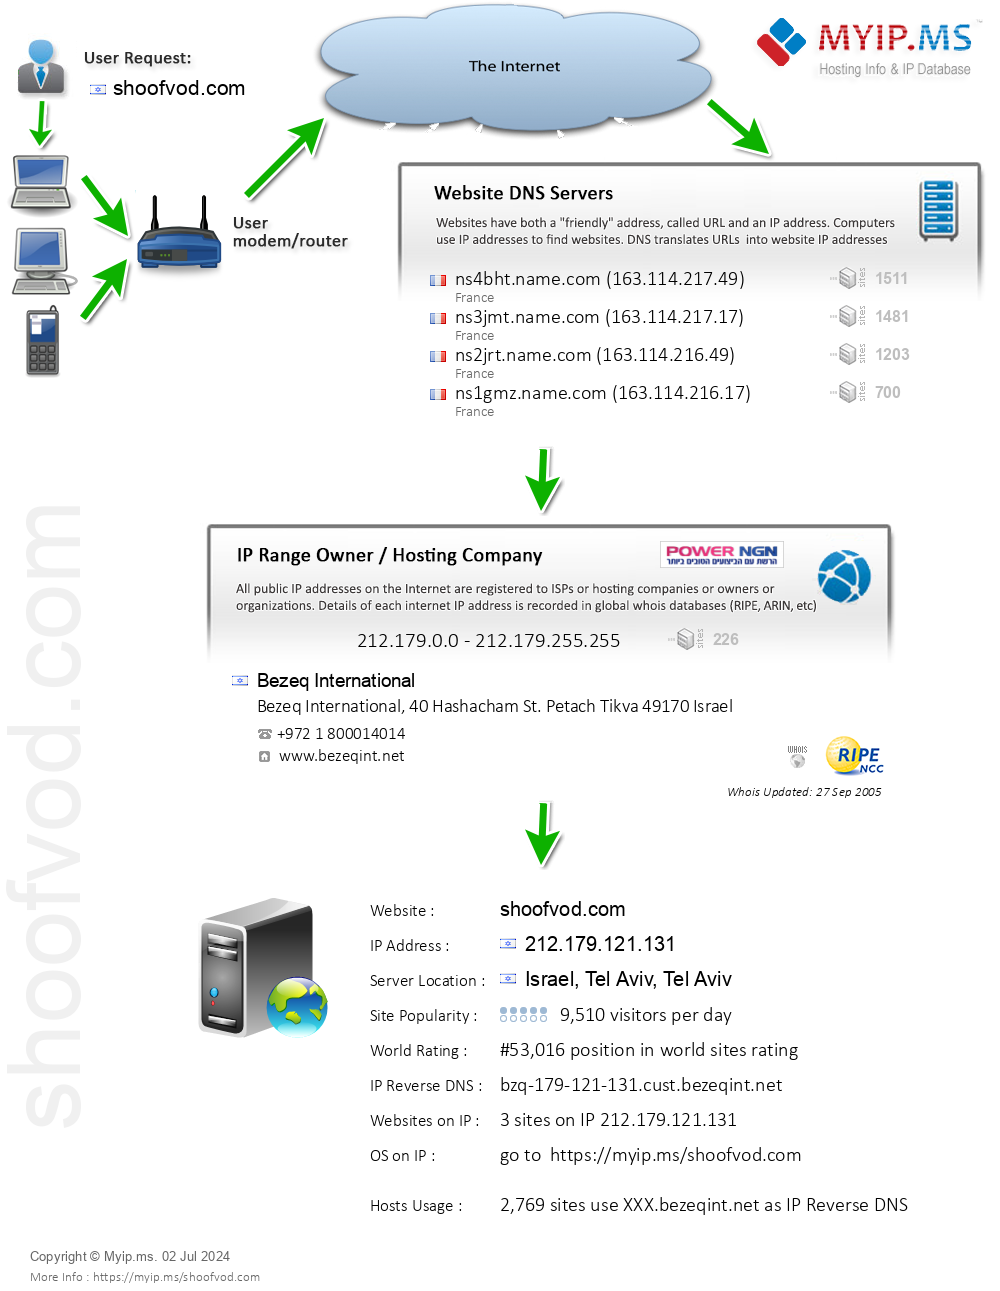 Shoofvod.com - Website Hosting Visual IP Diagram